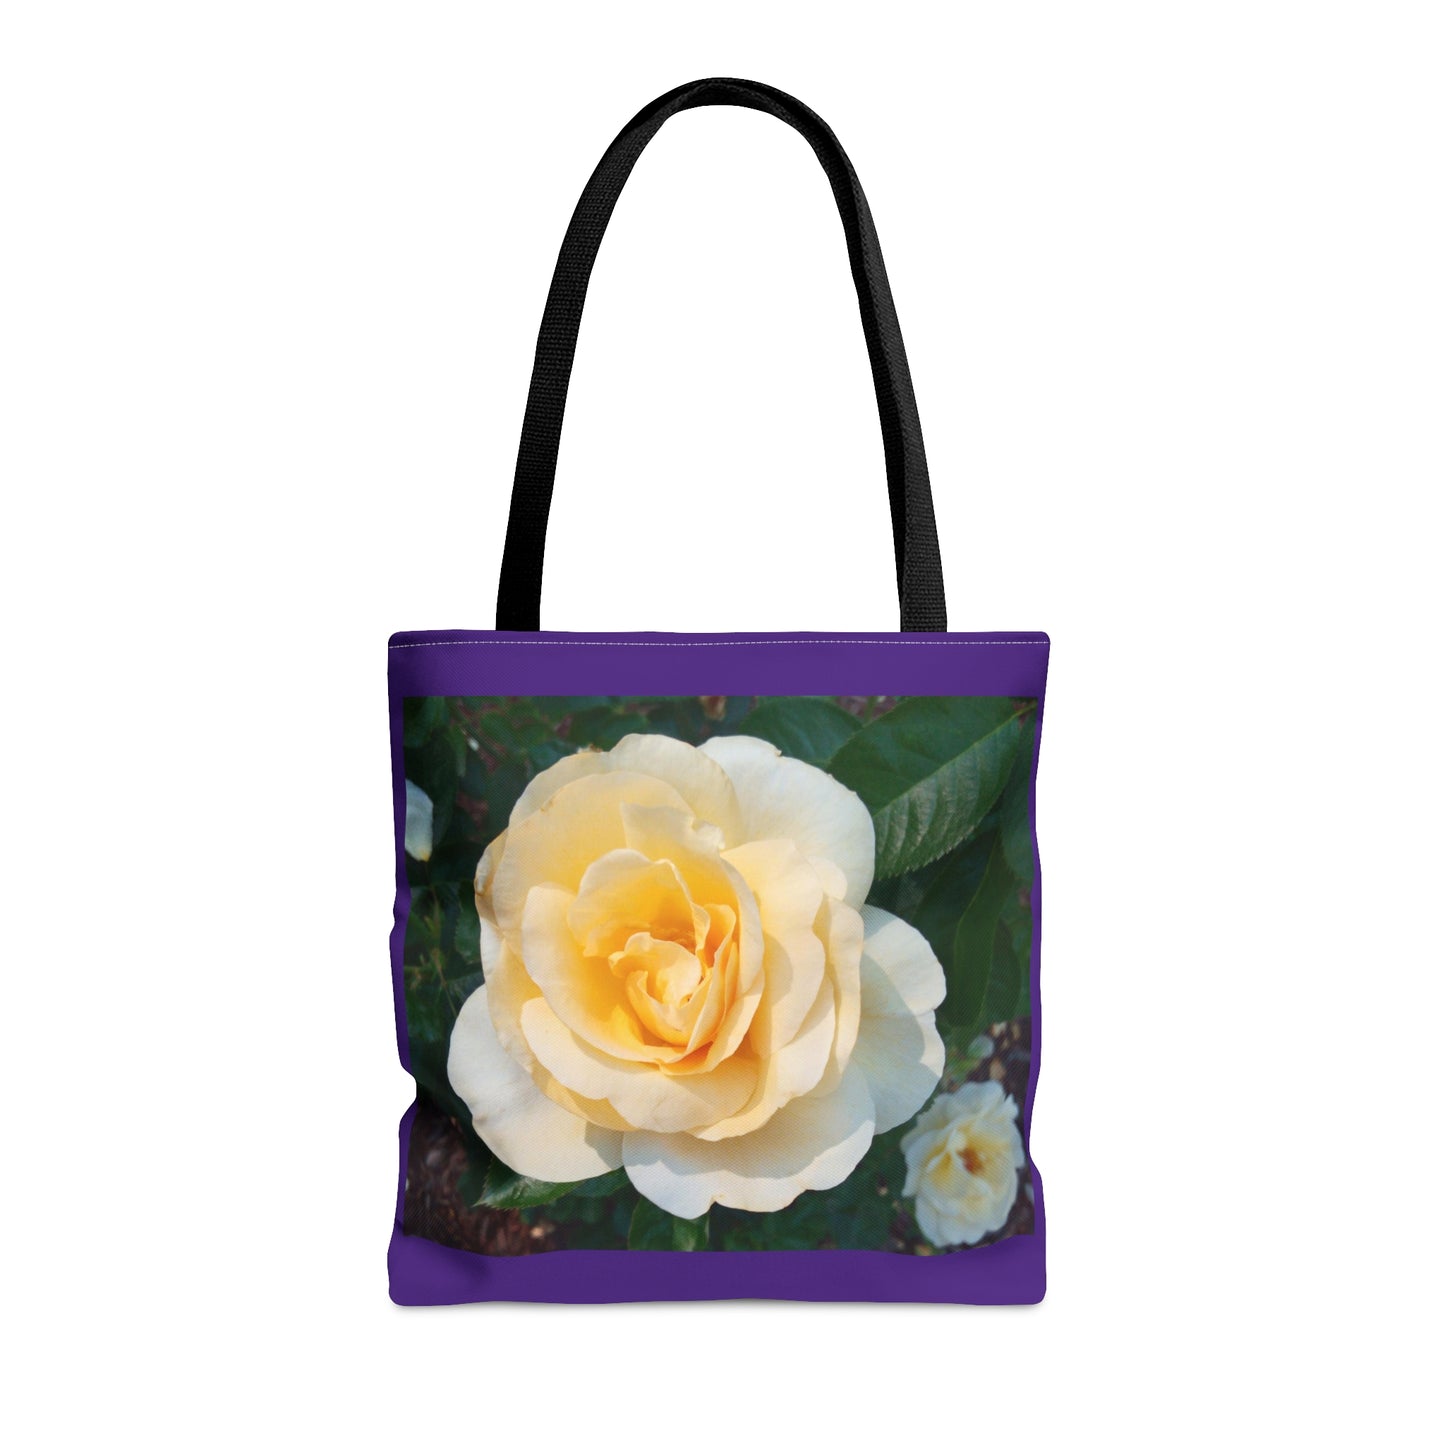 Cream Rose Tote Bag